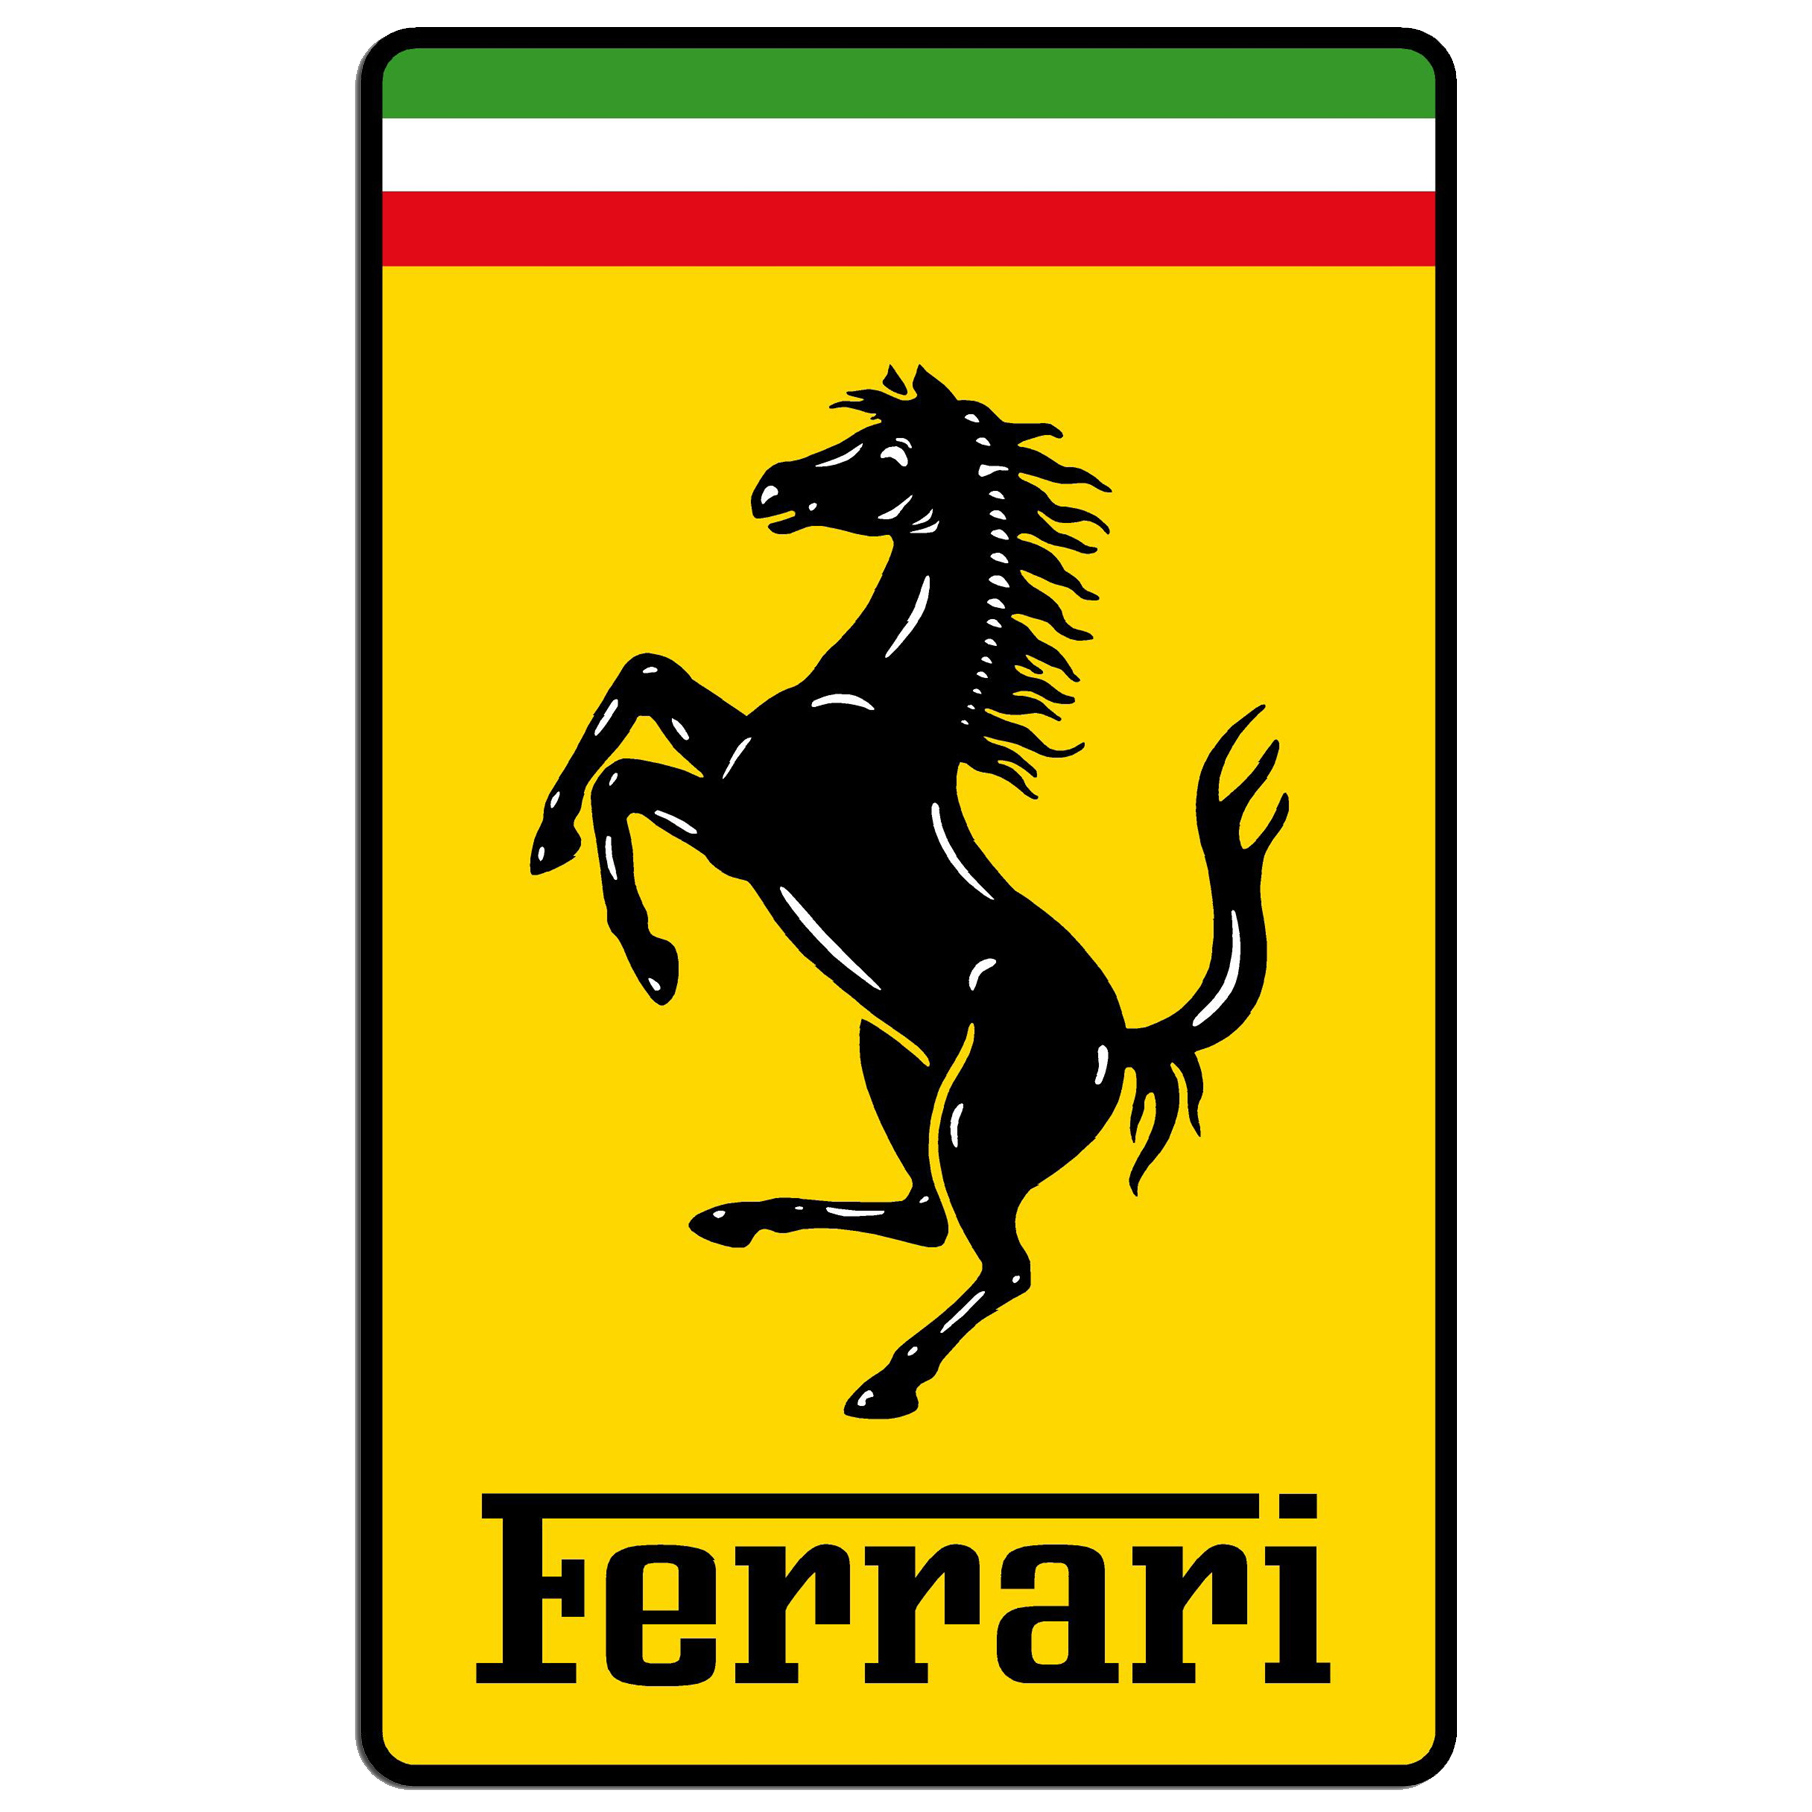 Ferrari Roma for sale